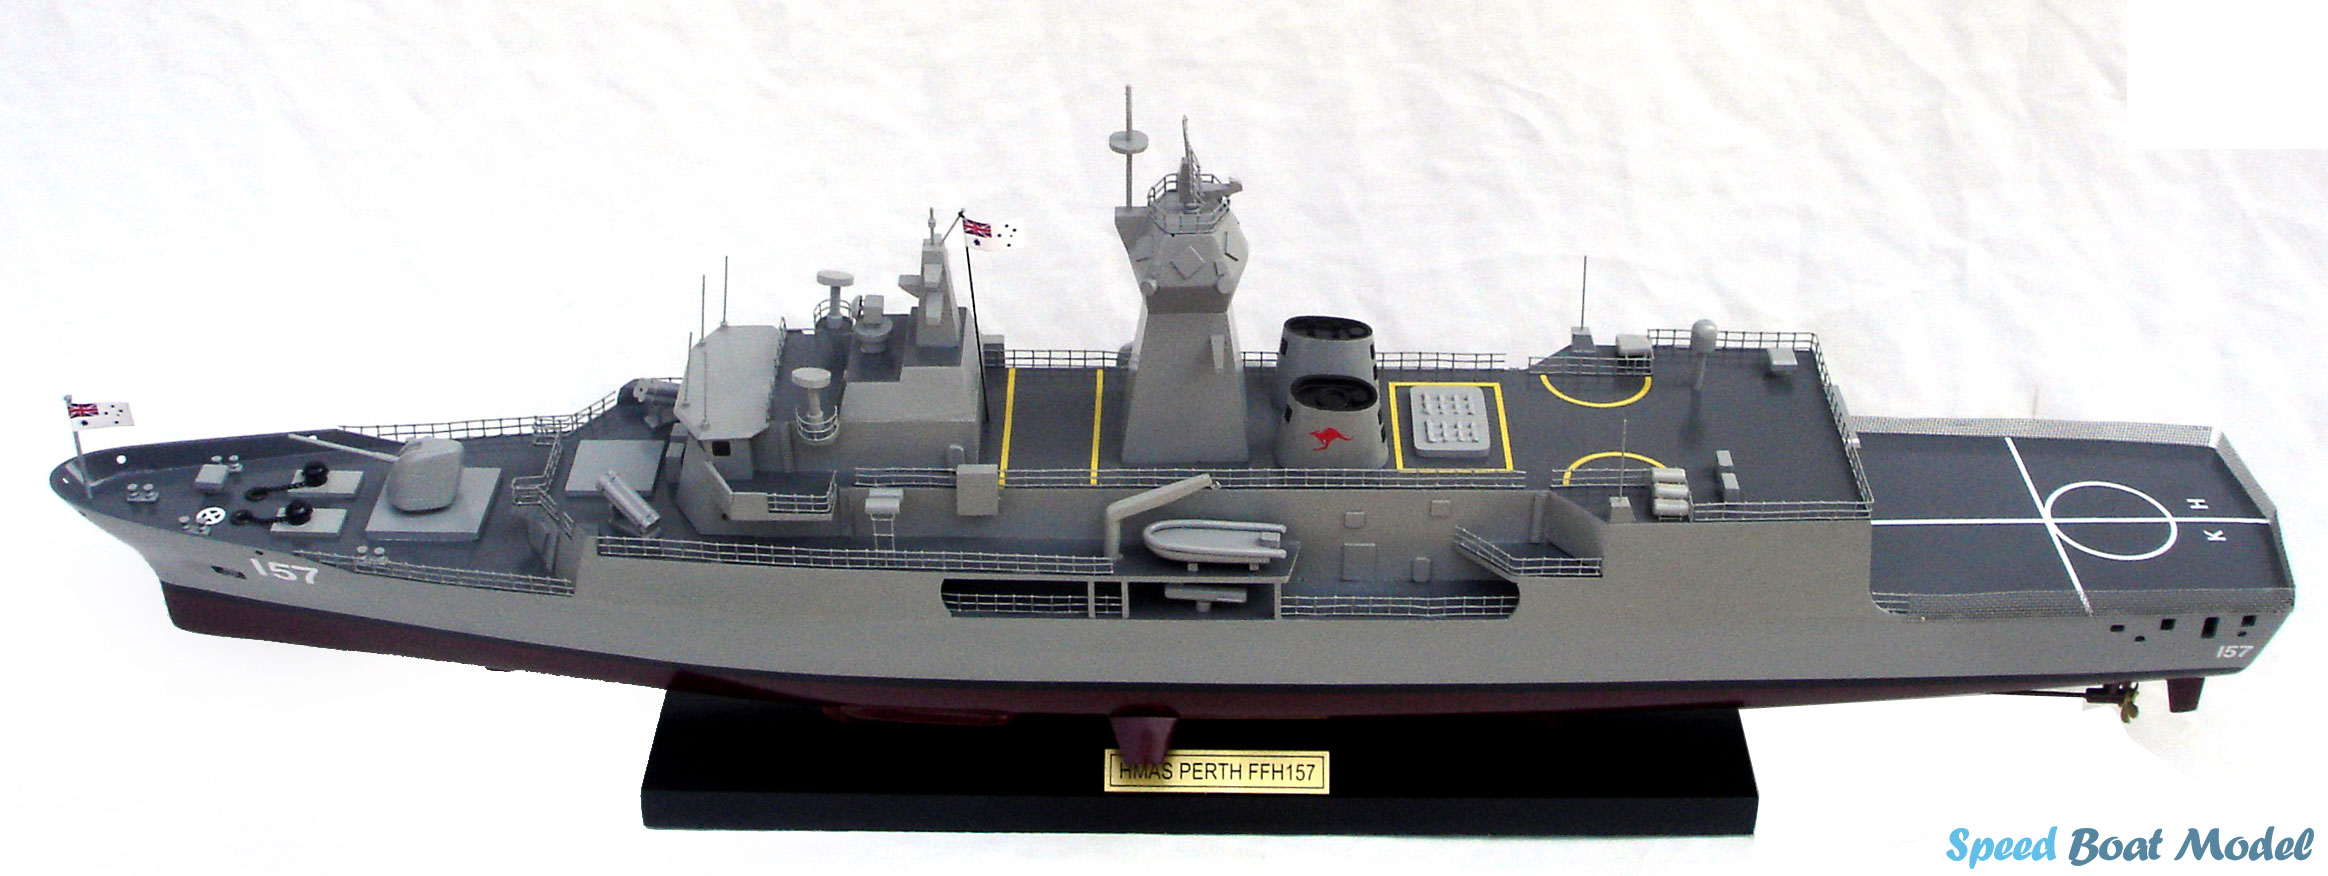 Hmas Perth Ffh 157 Warship Model 31.4